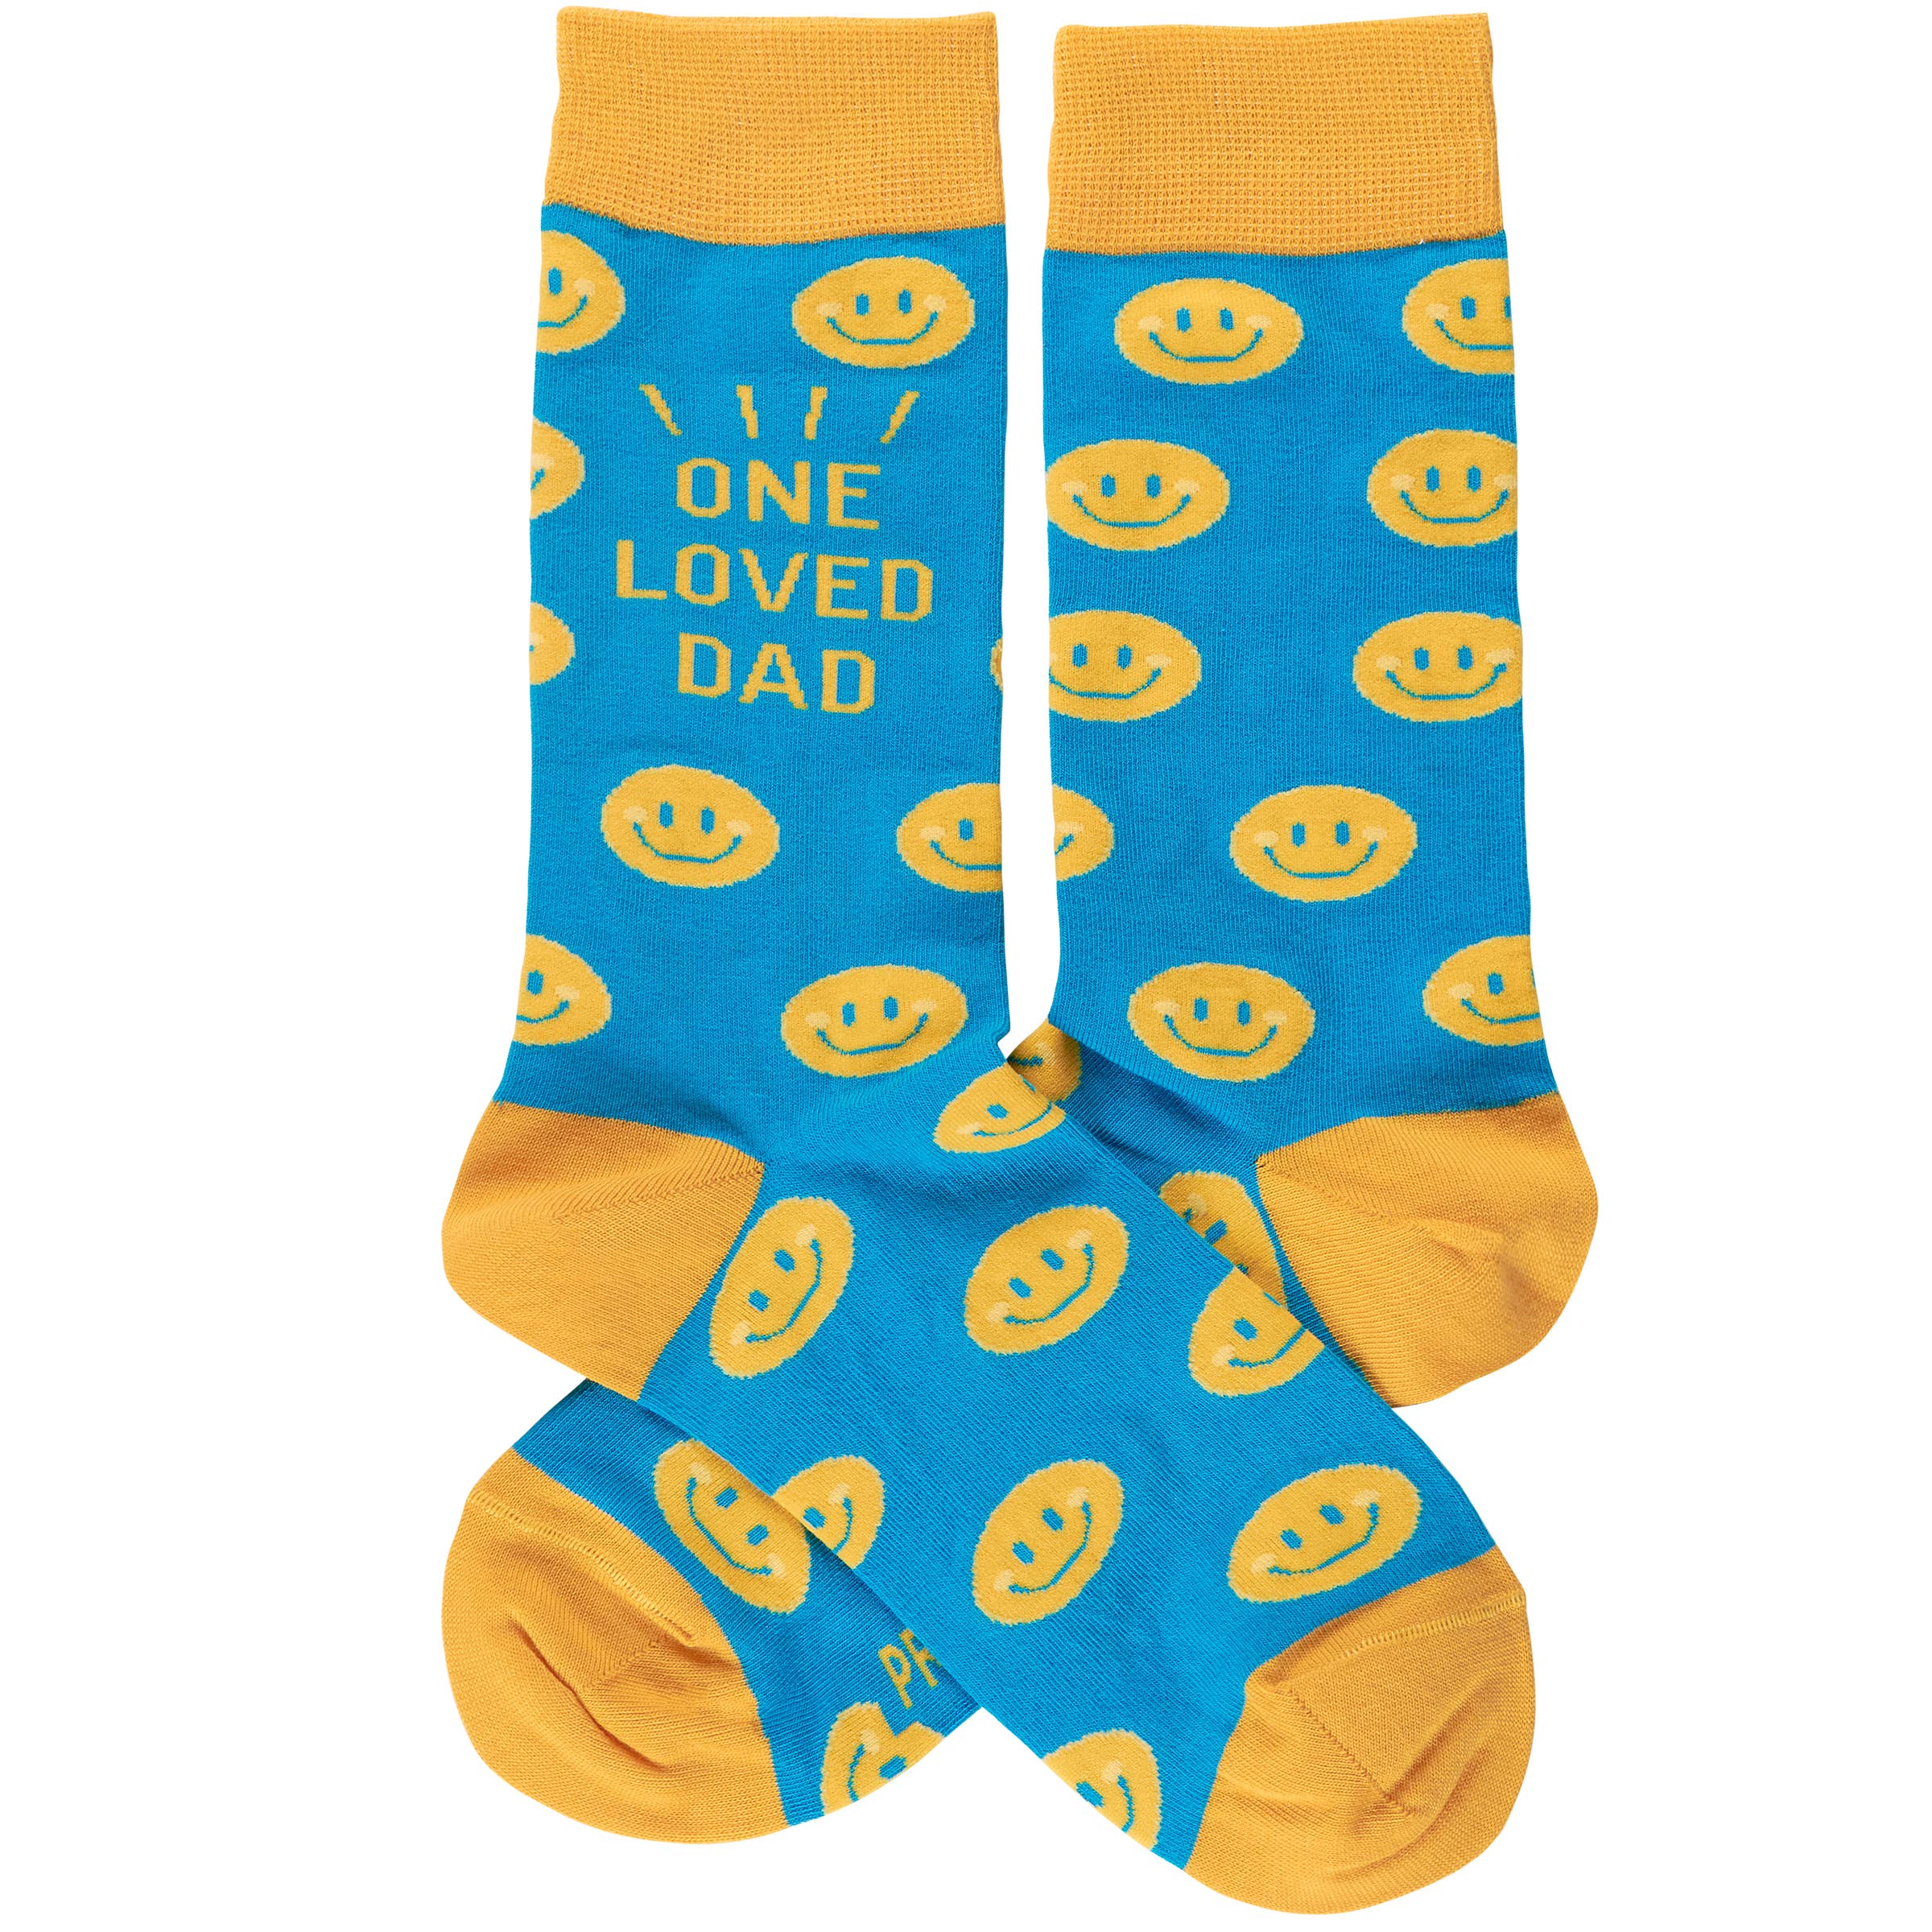 One Loved Dad Socks